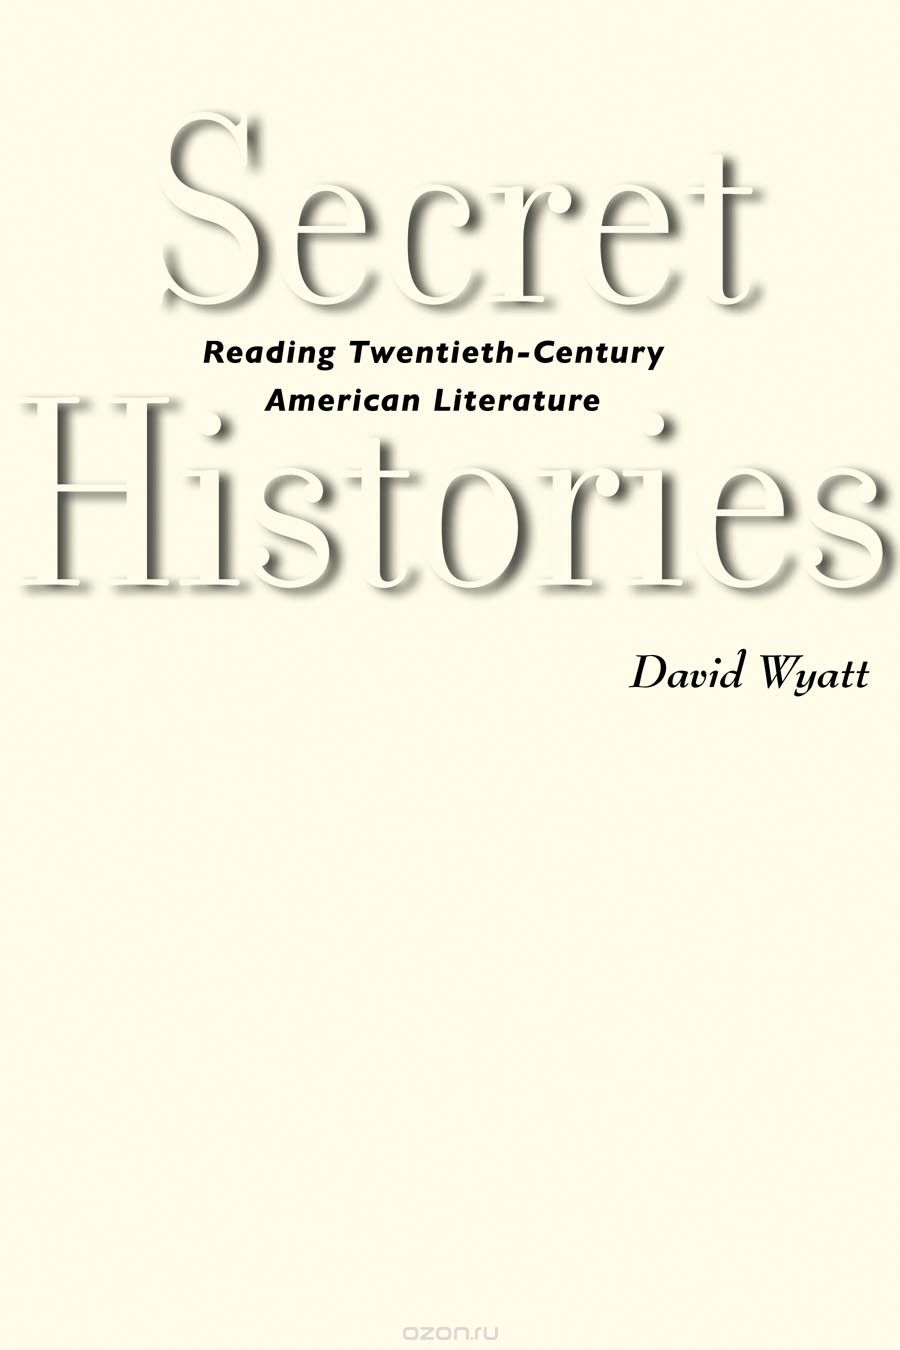 Скачать книгу "Secret Histories – Reading Twentieth–Century American Literature"